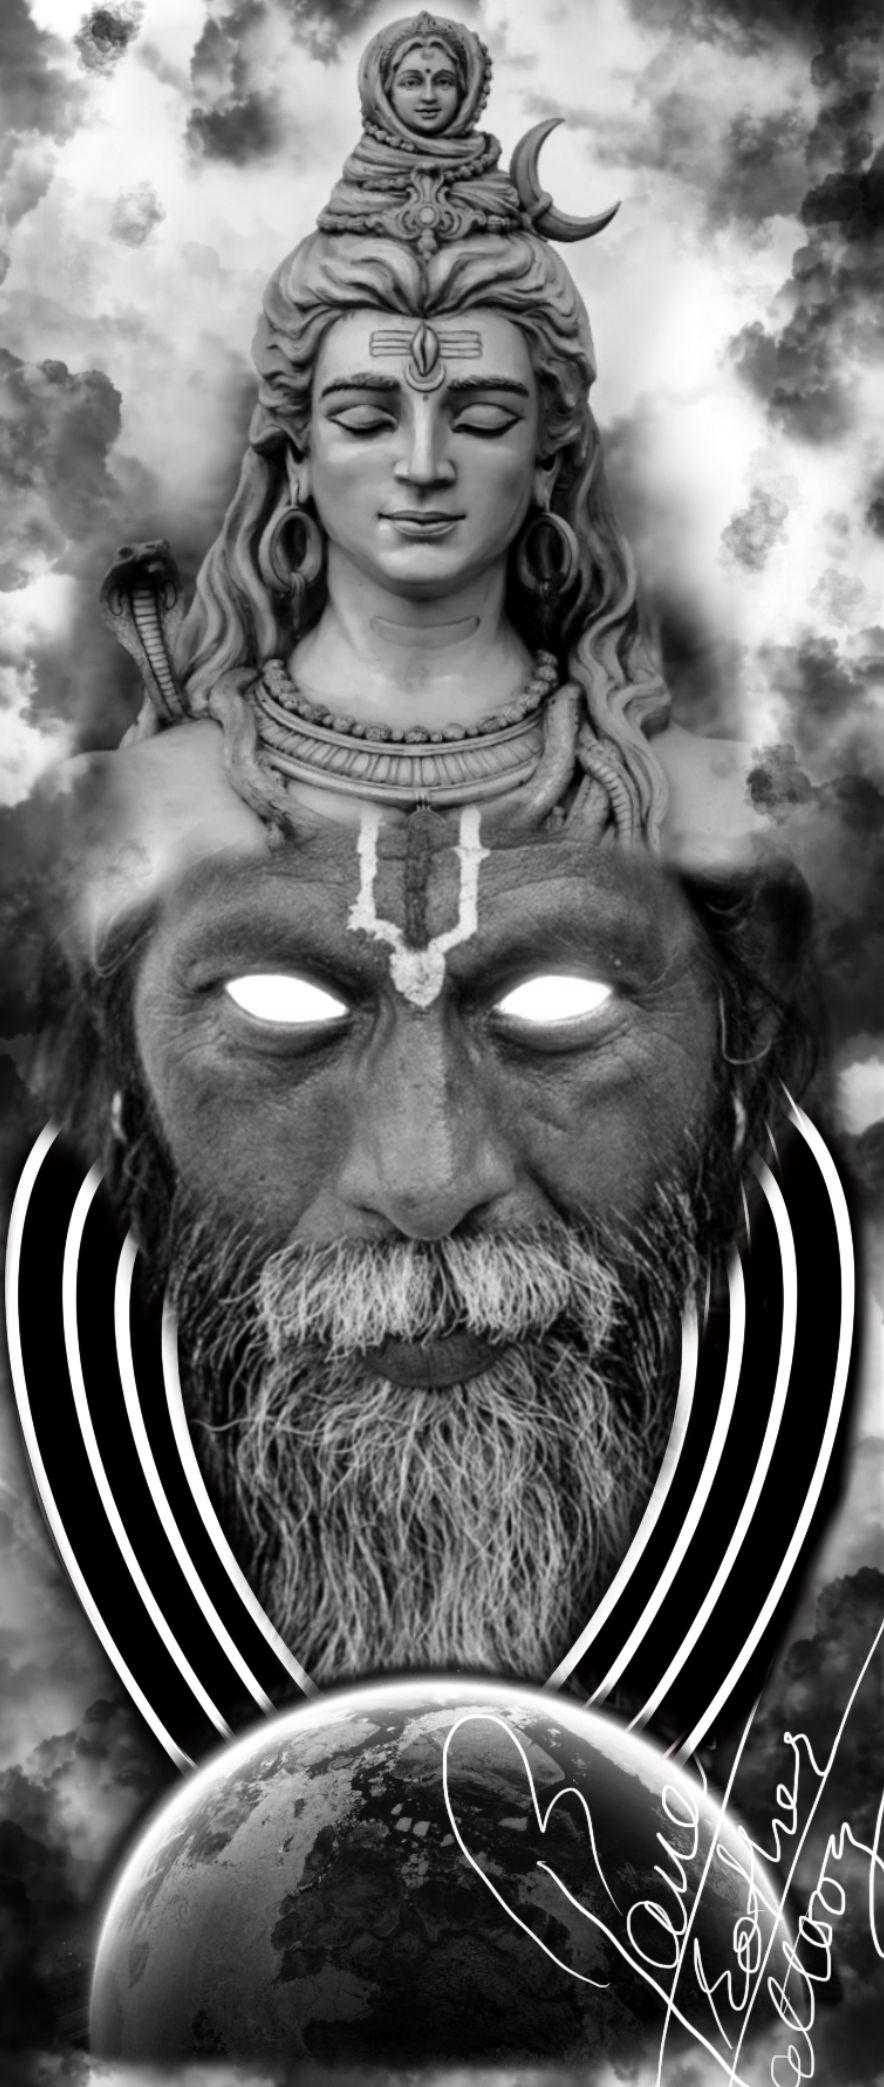 AI Art Generator: Hindu God Shiva, aghori, trident, ashes, smoke, red